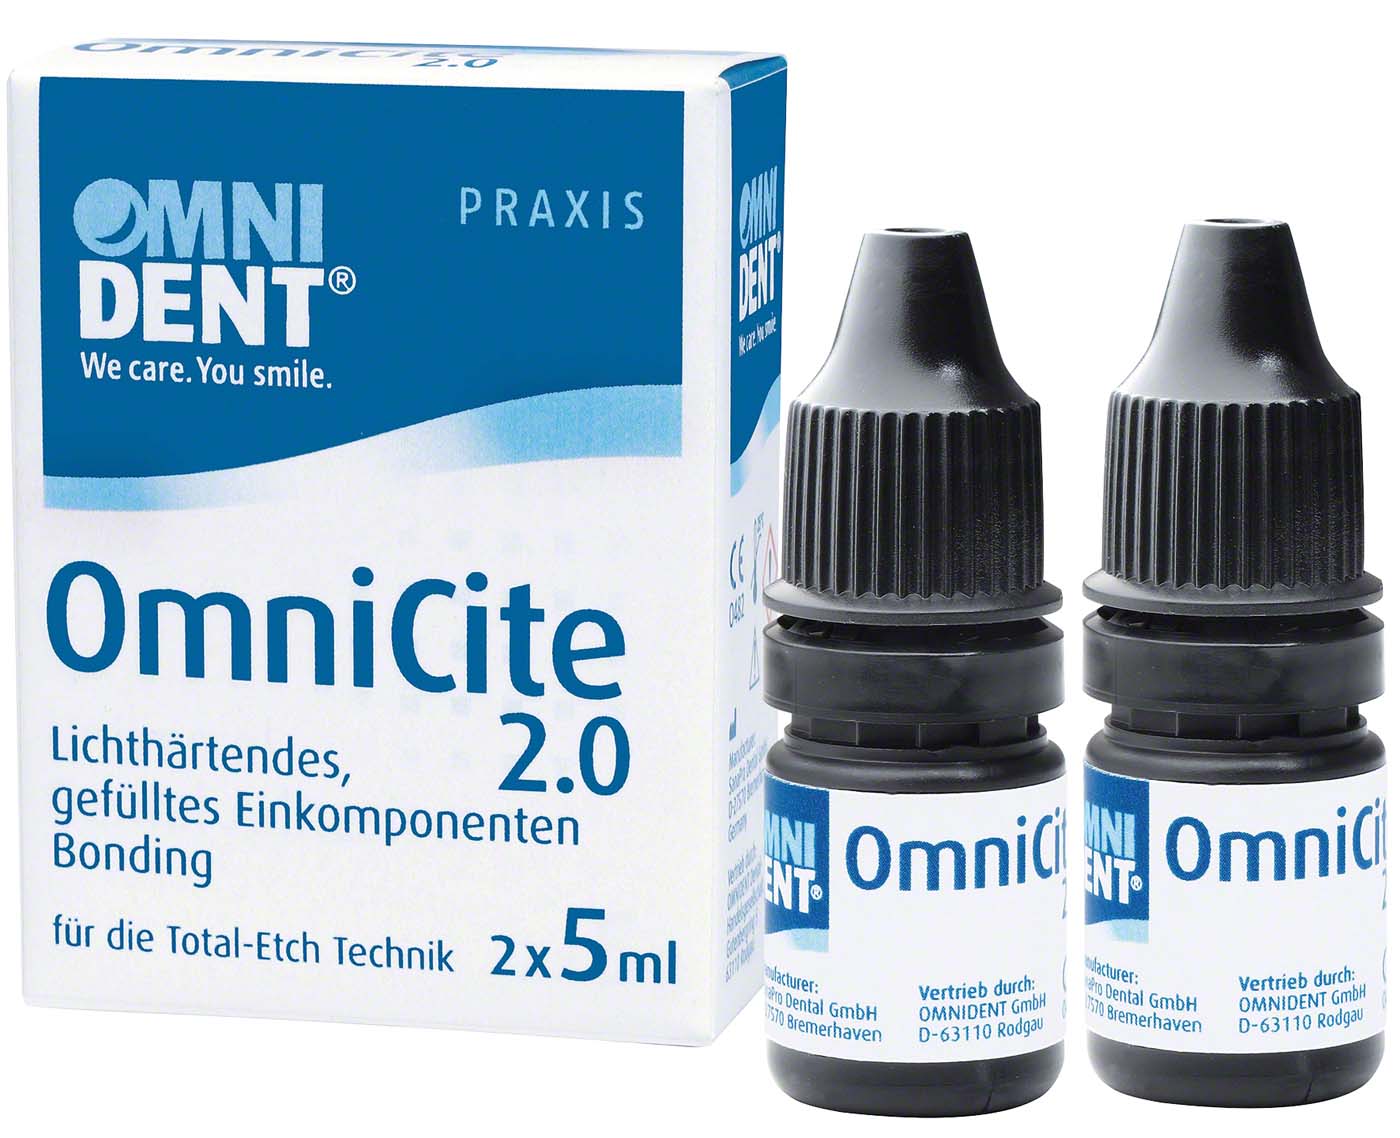 OmniCite 2.0 OMNIDENT